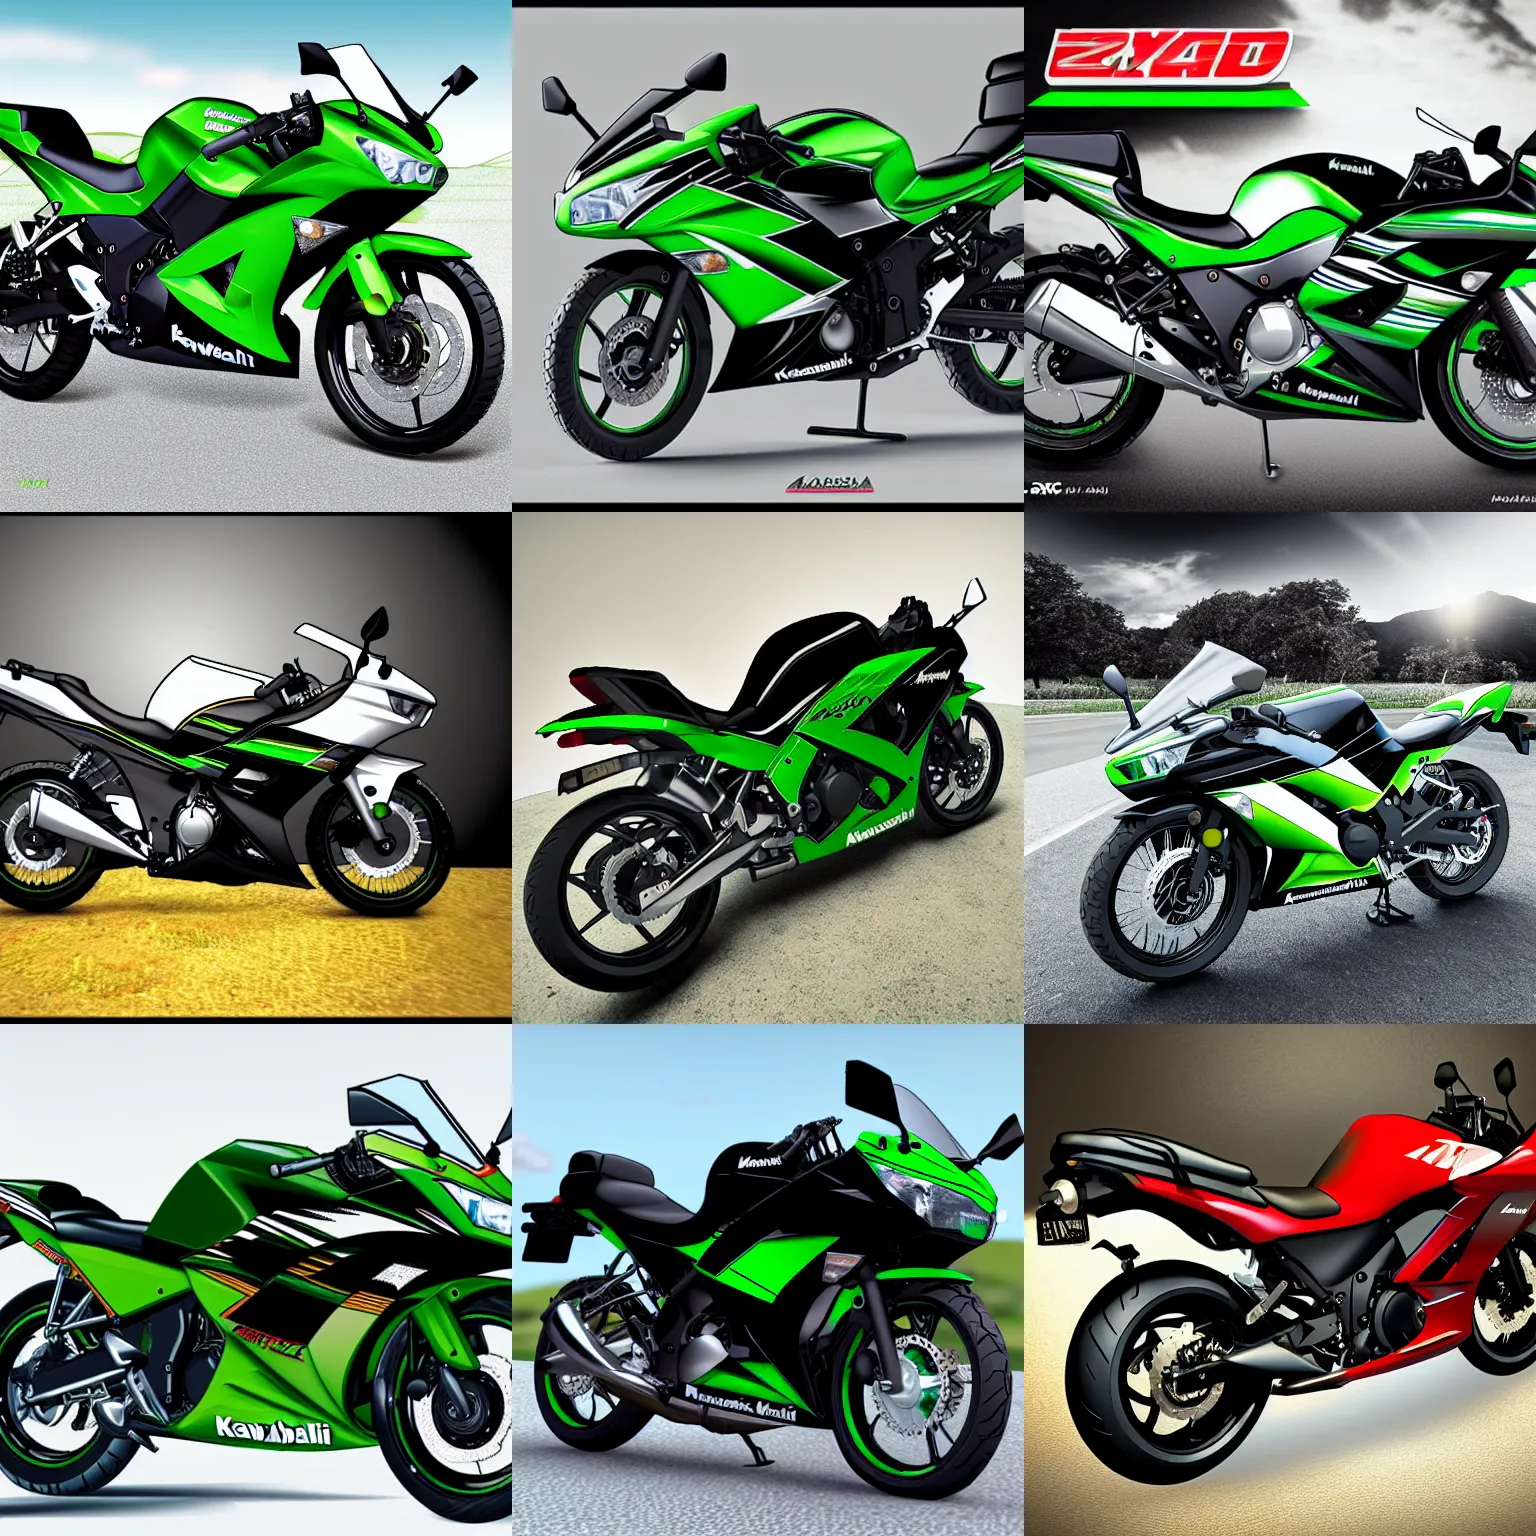 Prompt: Kawasaki ninja zx250 motorbike, 35mm wide angle, photorealistic, extremely realistic